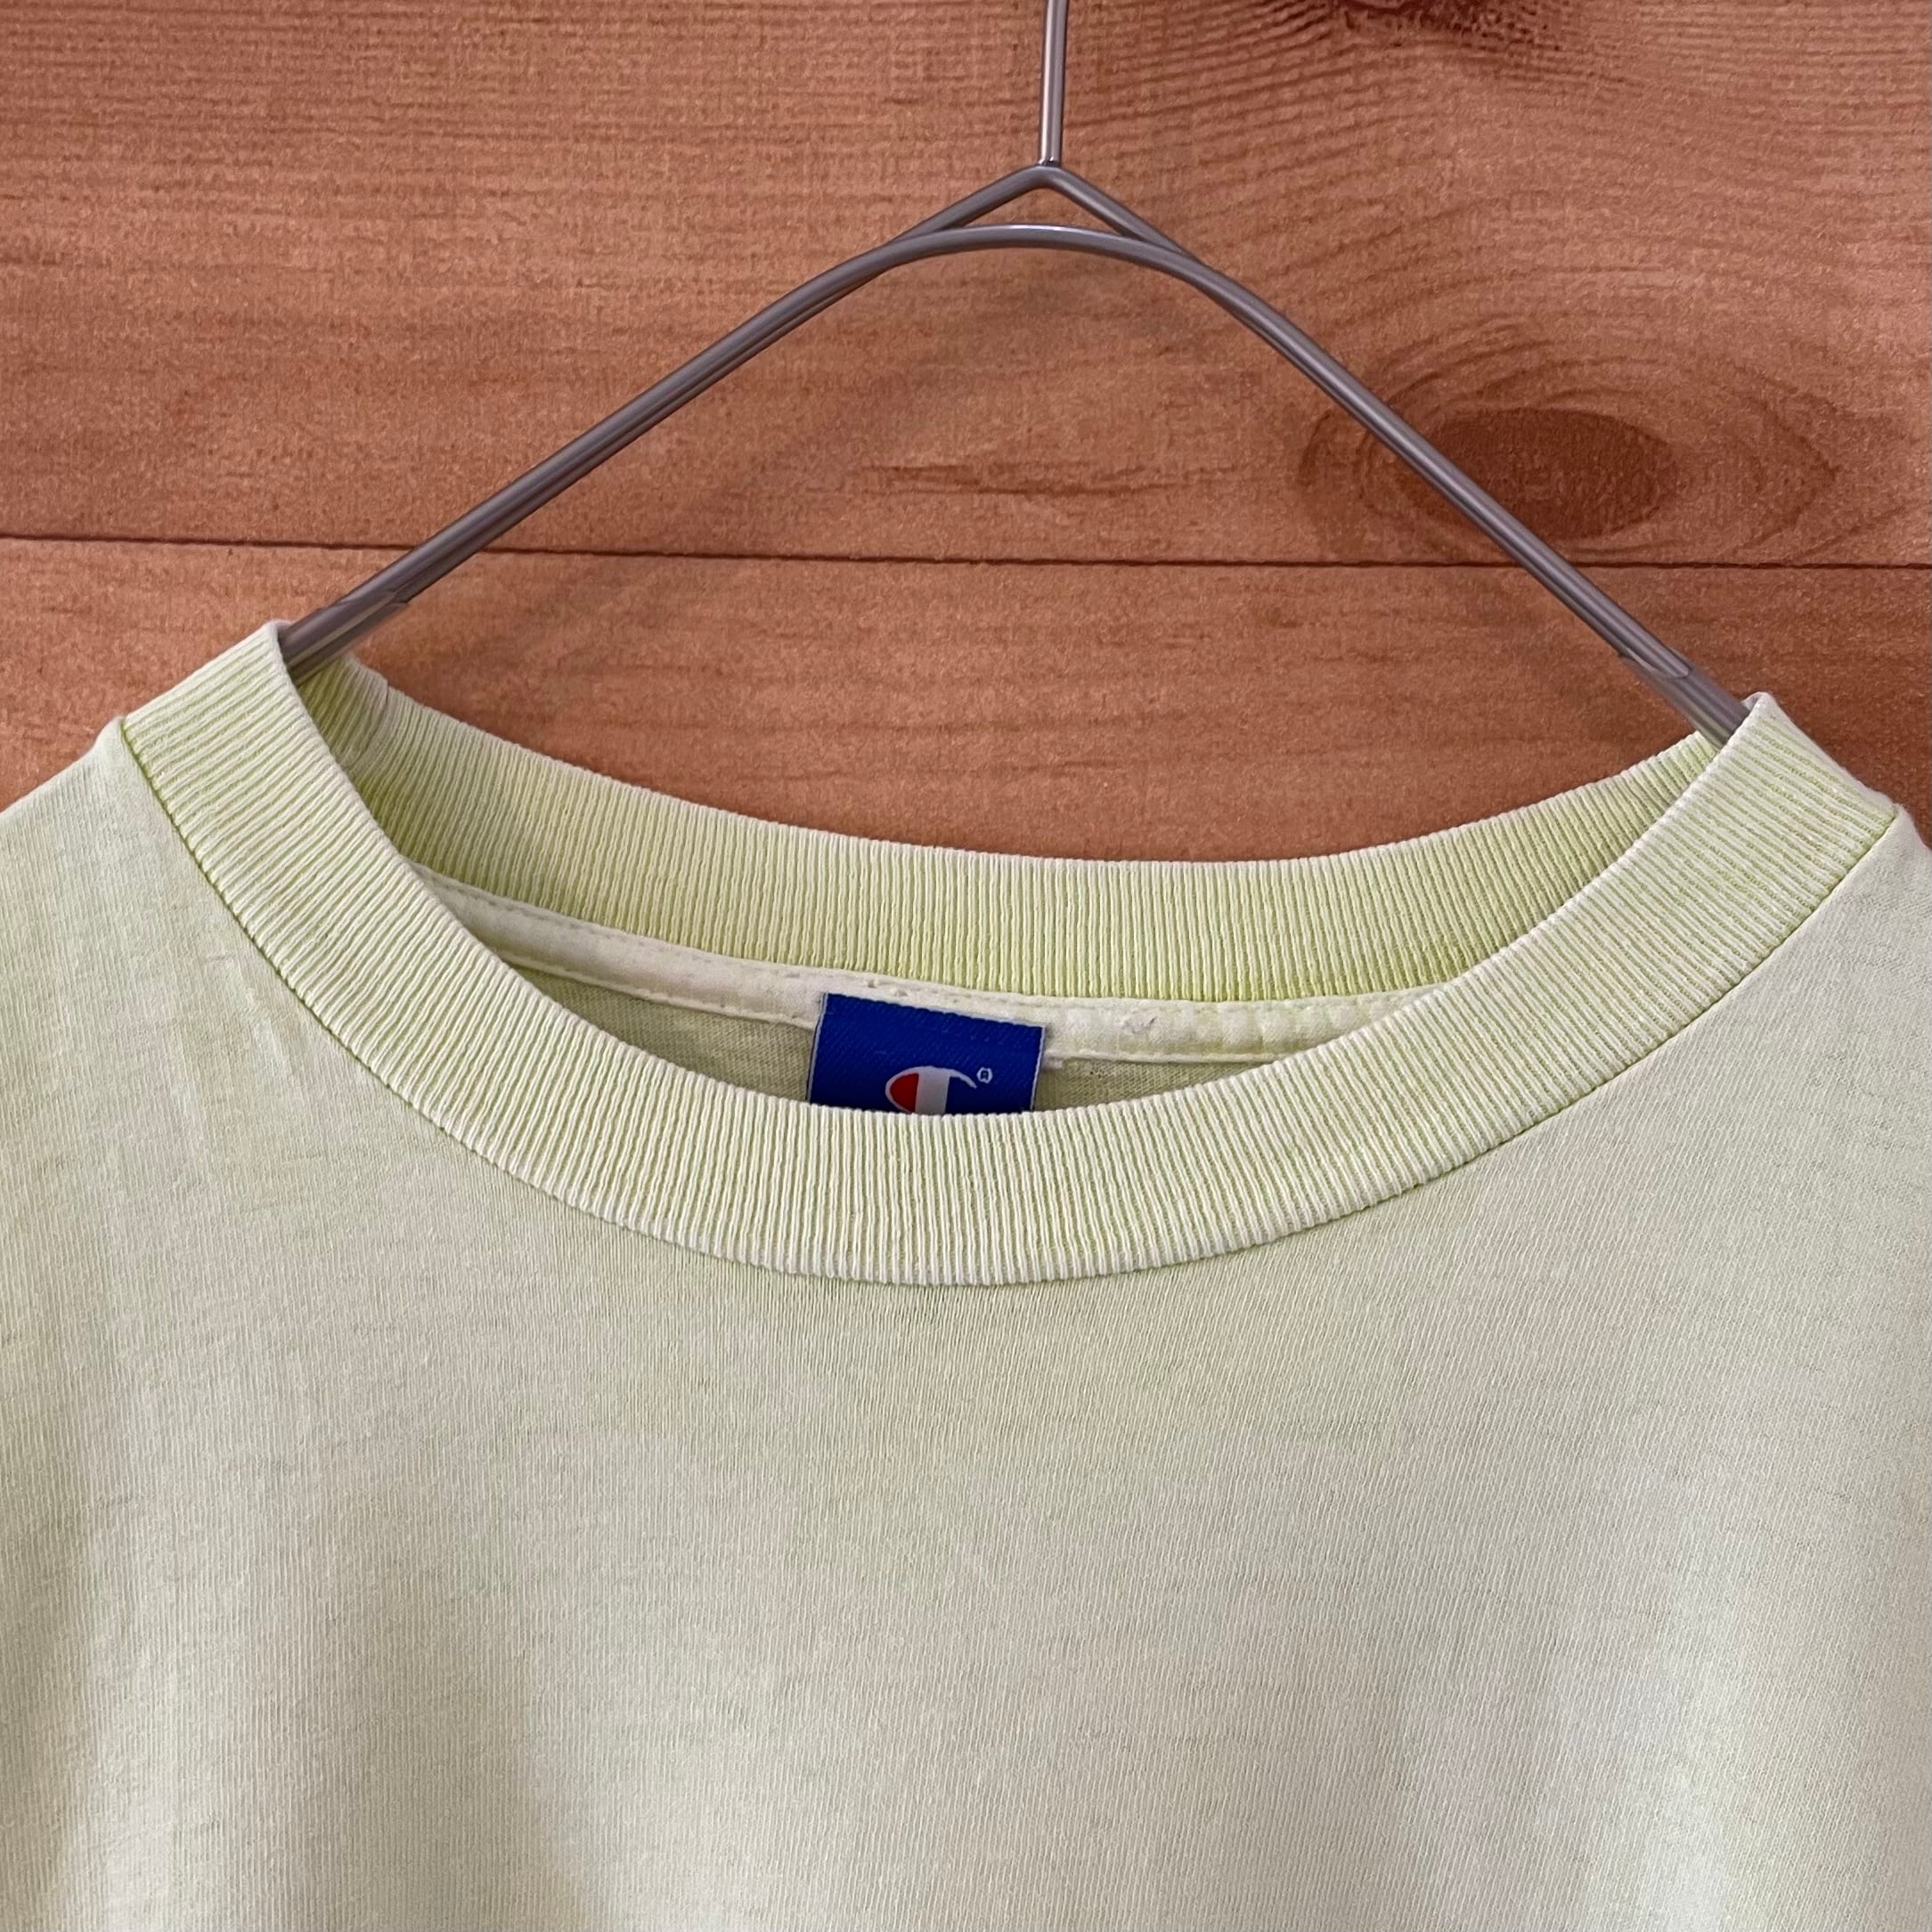 90s 半袖Tシャツ USA製 ラグラン 無地 刺繍タグ ツートーン バイカラー